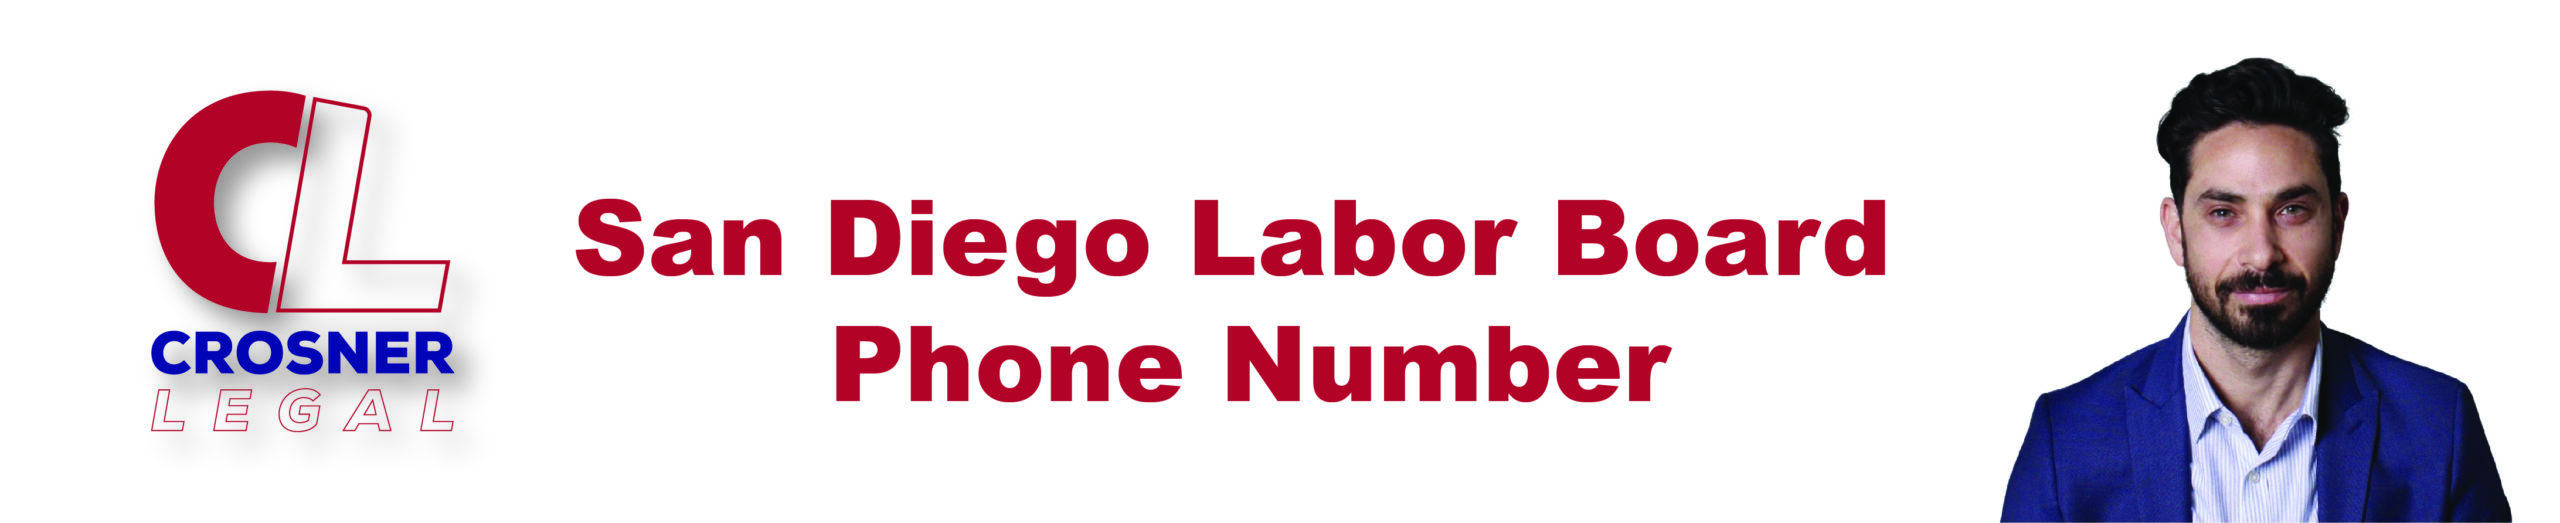 San Diego Labor Board Phone Number